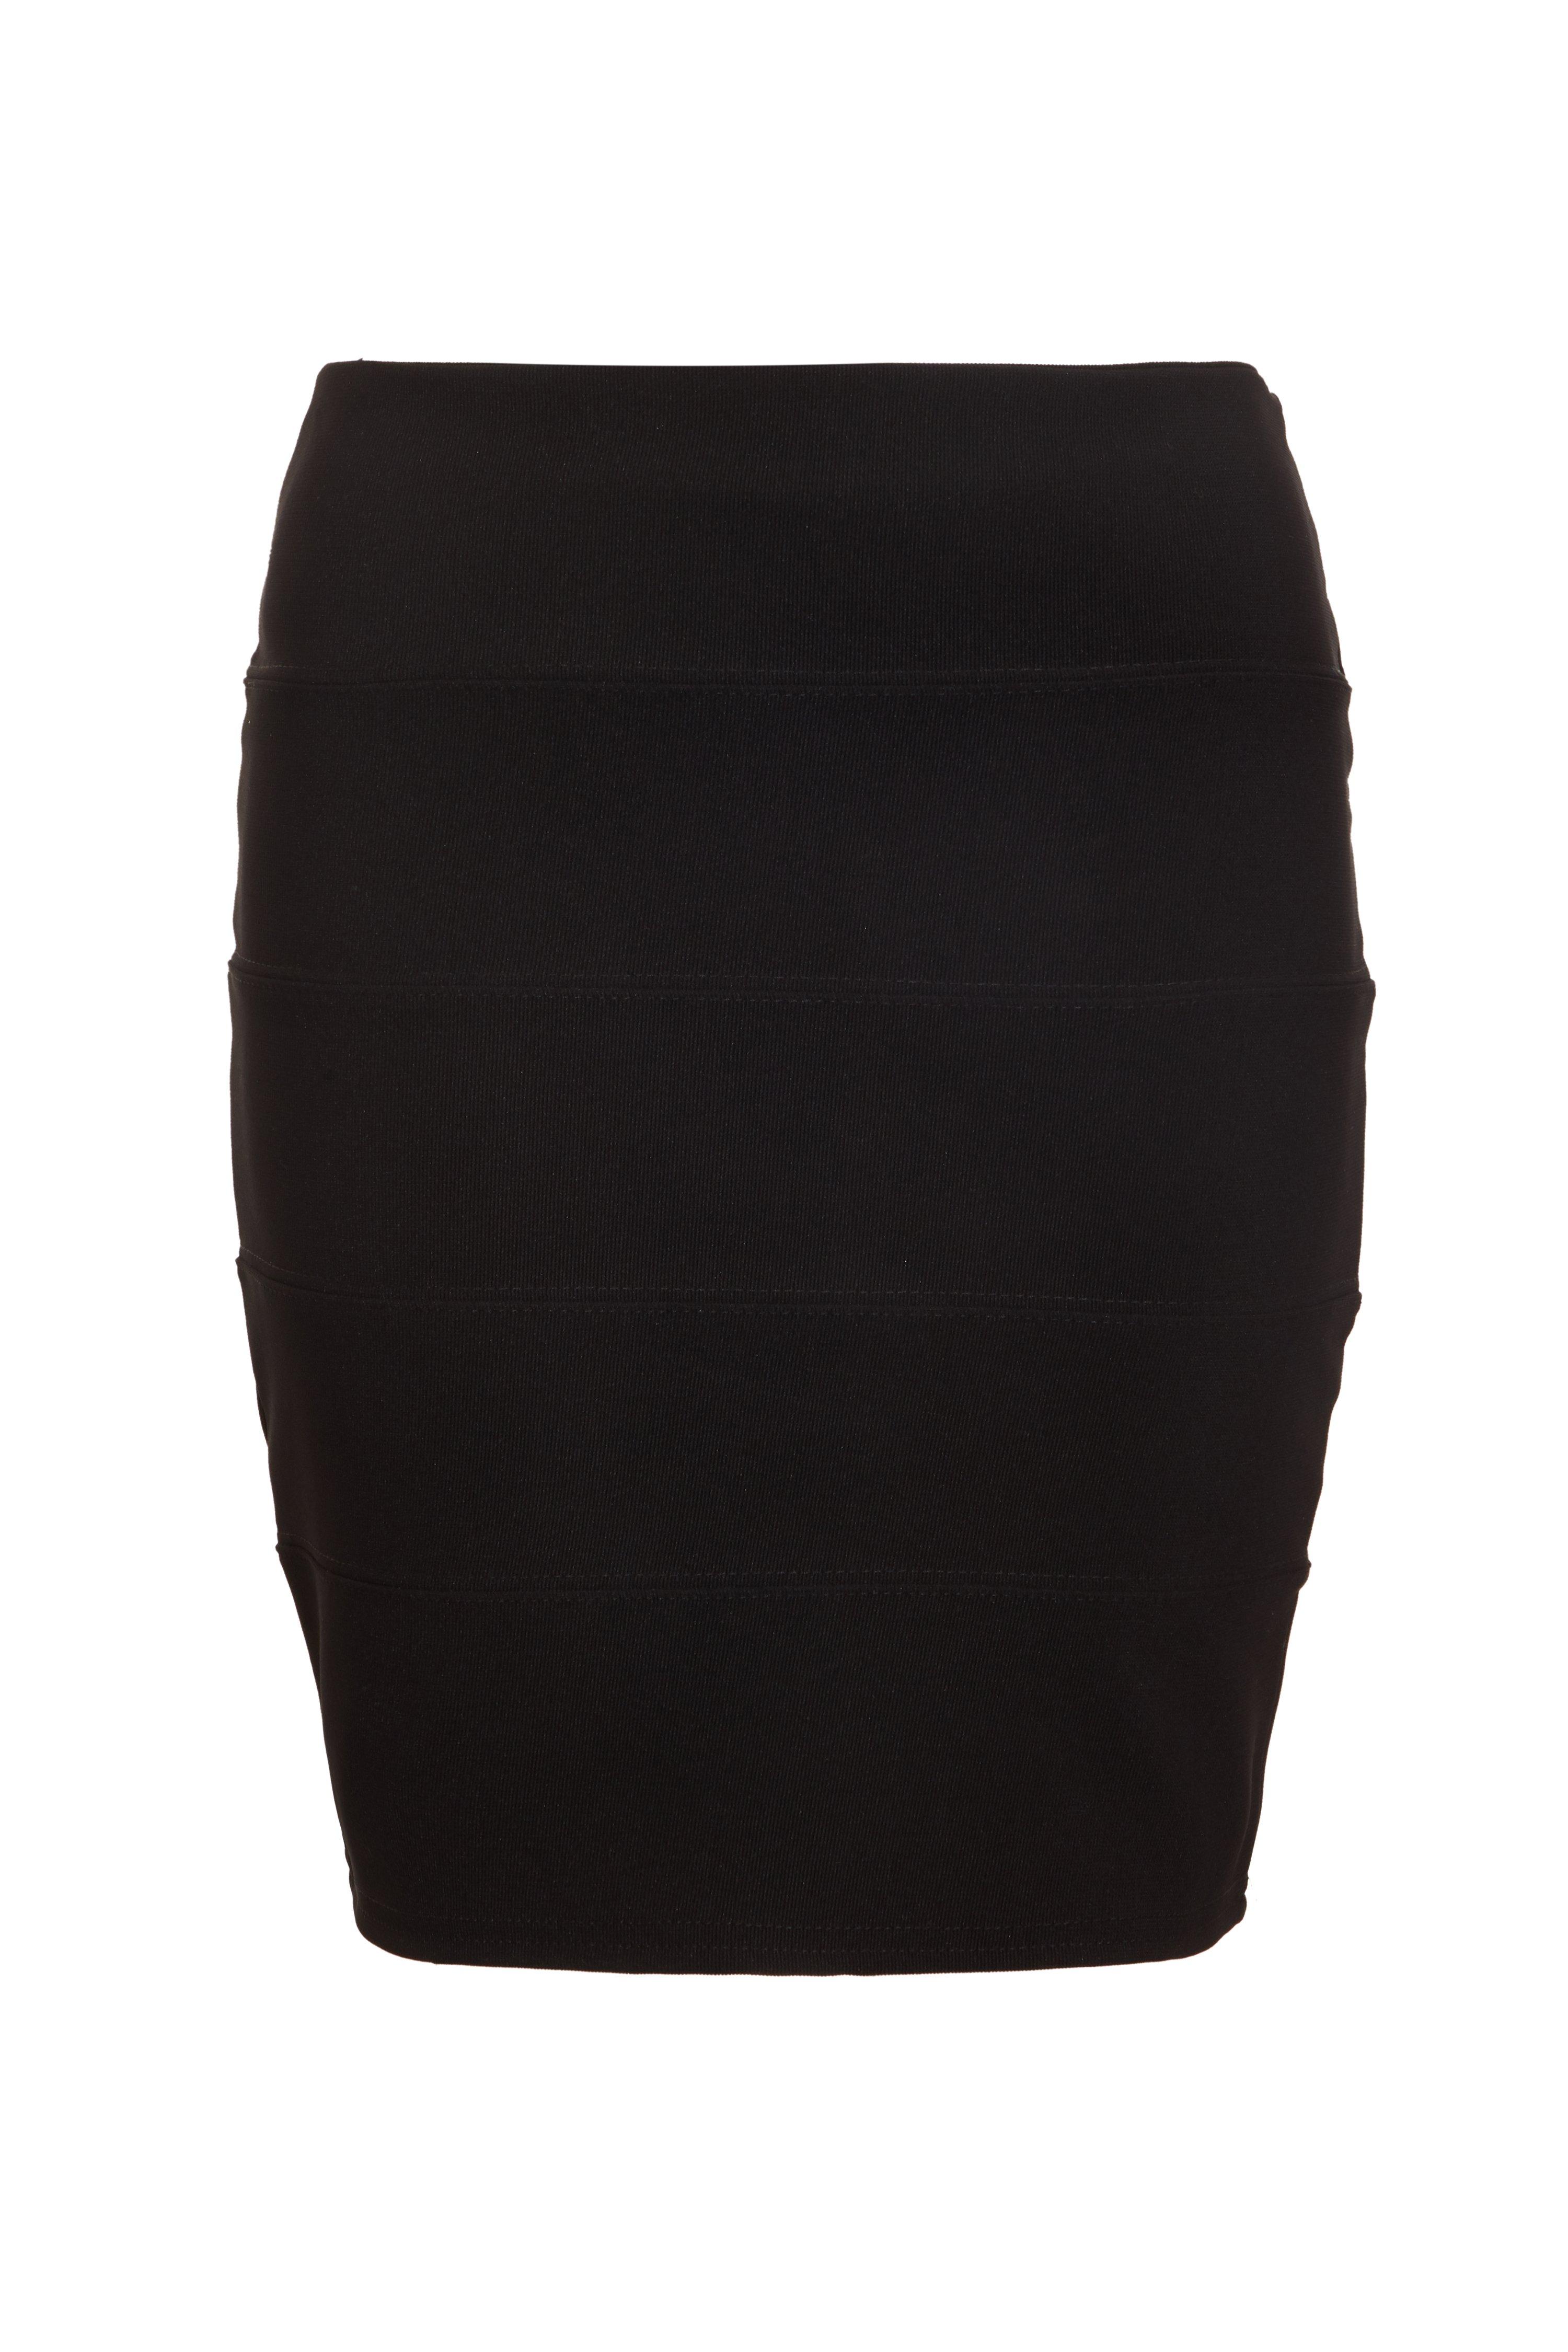 Black Ribbed Bodycon Skirt - Quiz Clothing